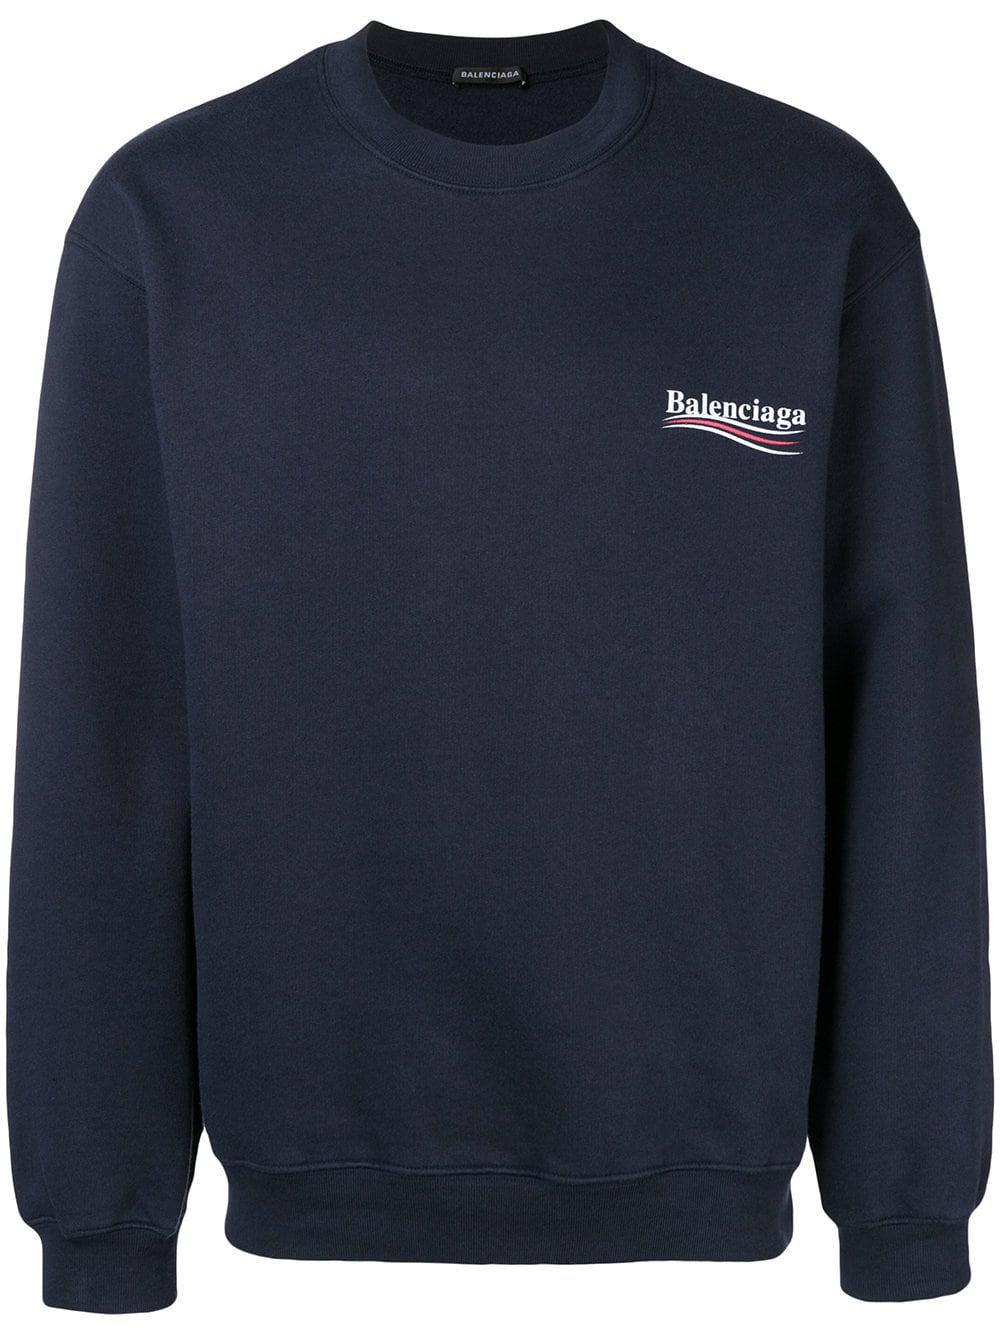 BALENCIAGA sweatshirt with Political Campaign logo  Black  Balenciaga  sweater 682019TMVE6 online on GIGLIOCOM